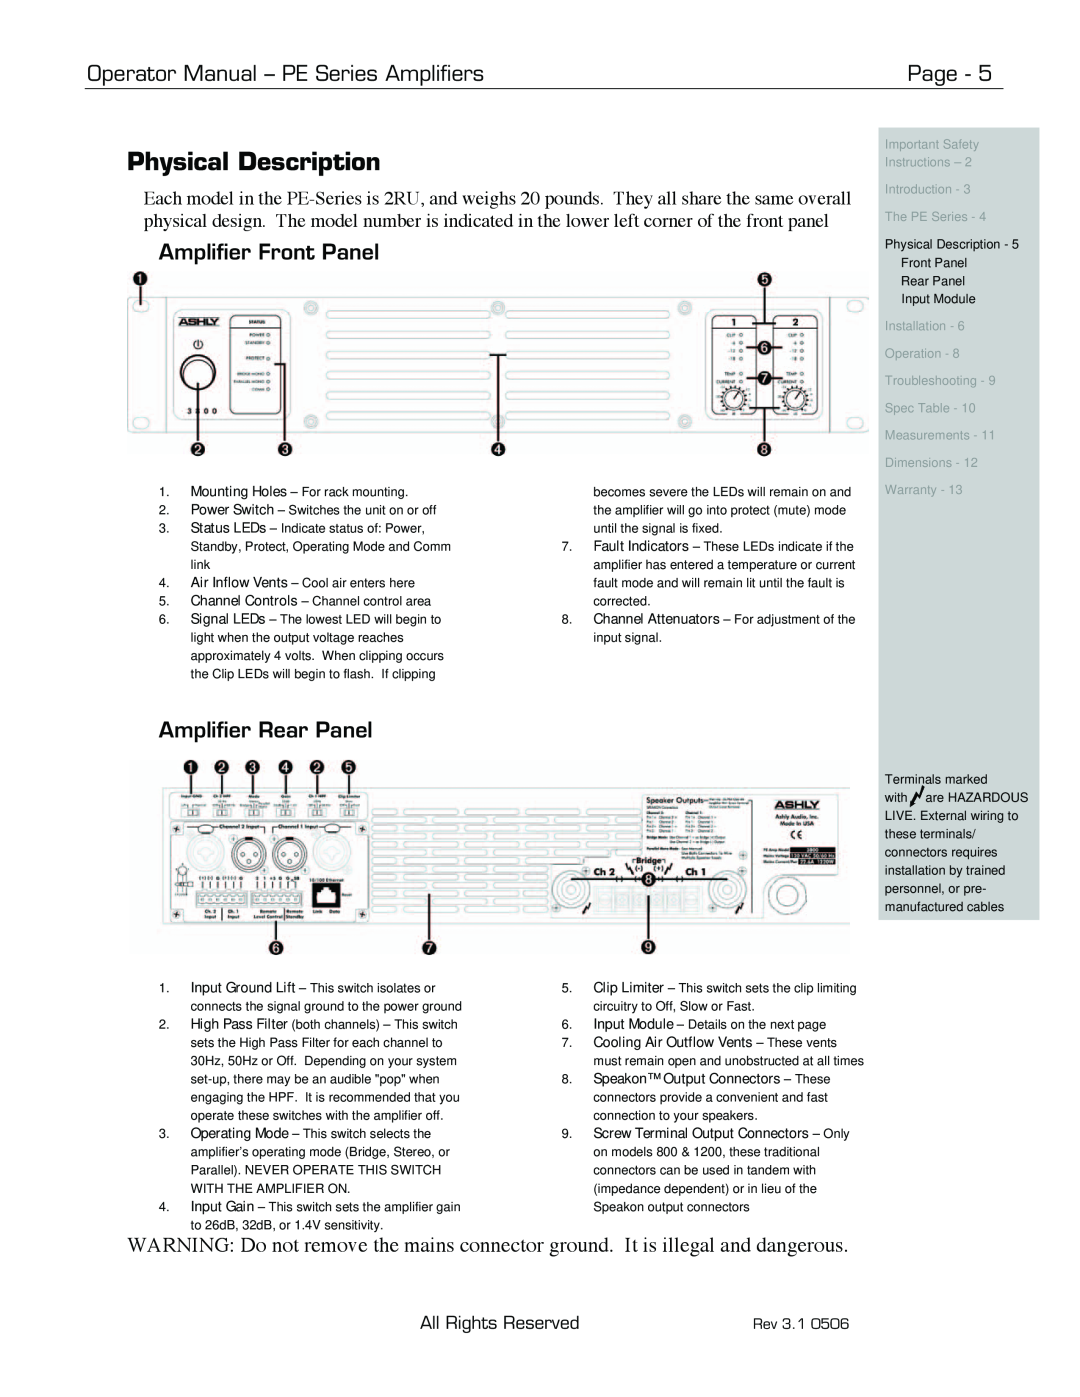 Ashly PE-Series Physical Description, Amplifier Front Panel, Amplifier Rear Panel, Operator Manual - PE Series Amplifiers 